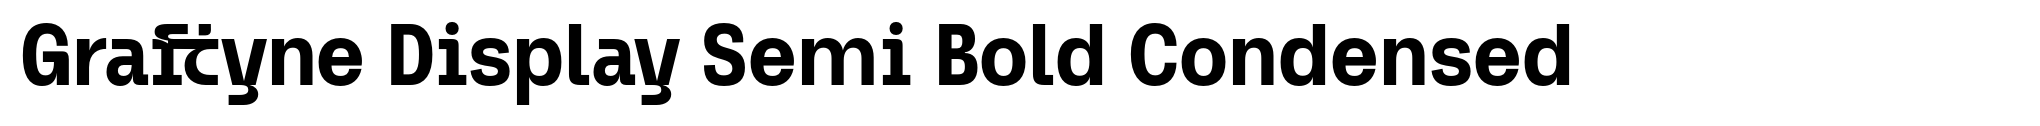 Graftyne Display Semi Bold Condensed image